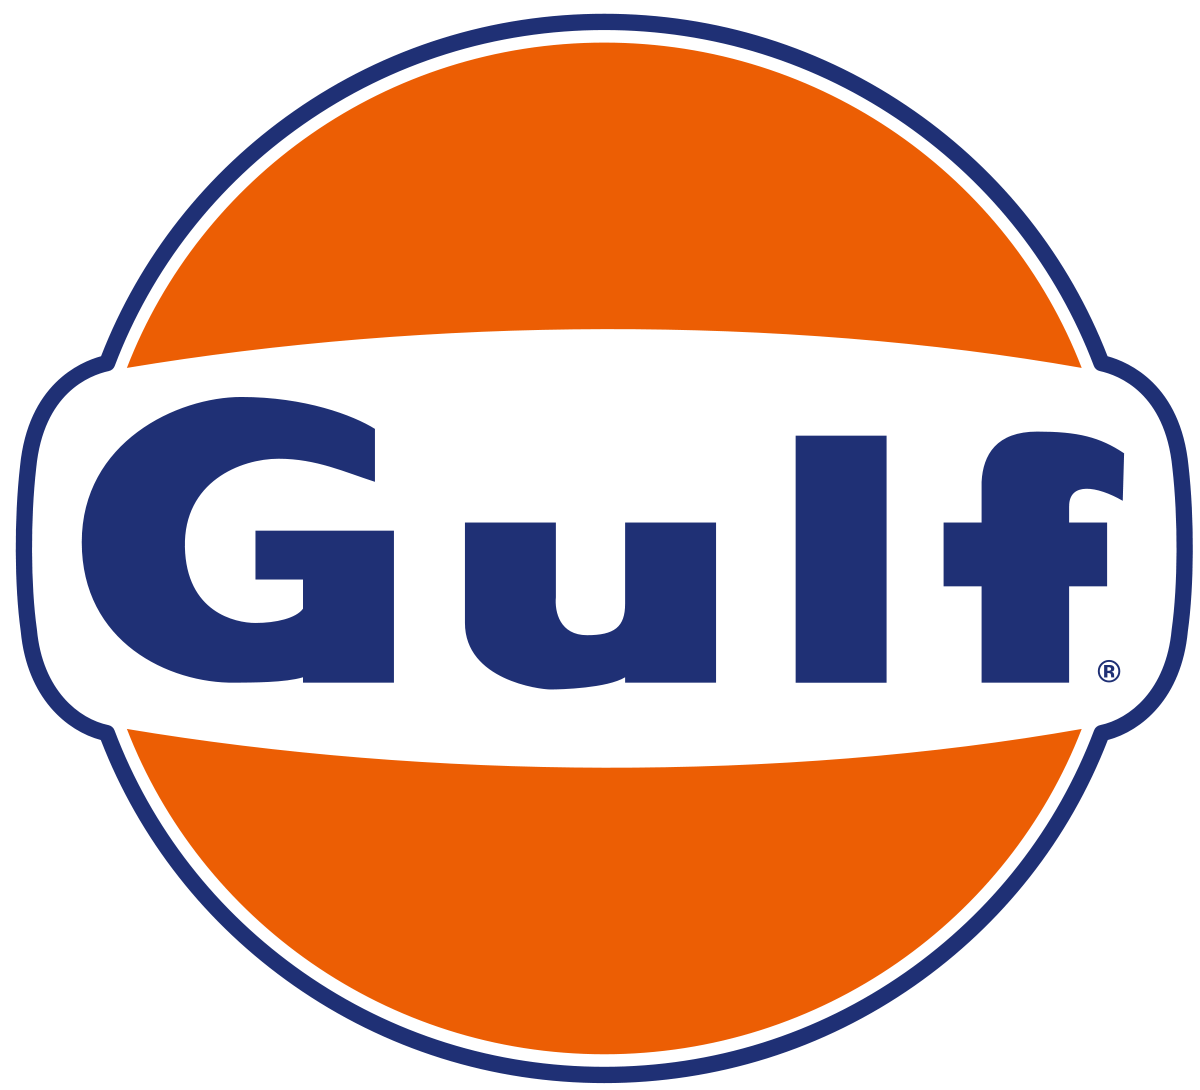 Old Oil Company Logo - Gulf Oil